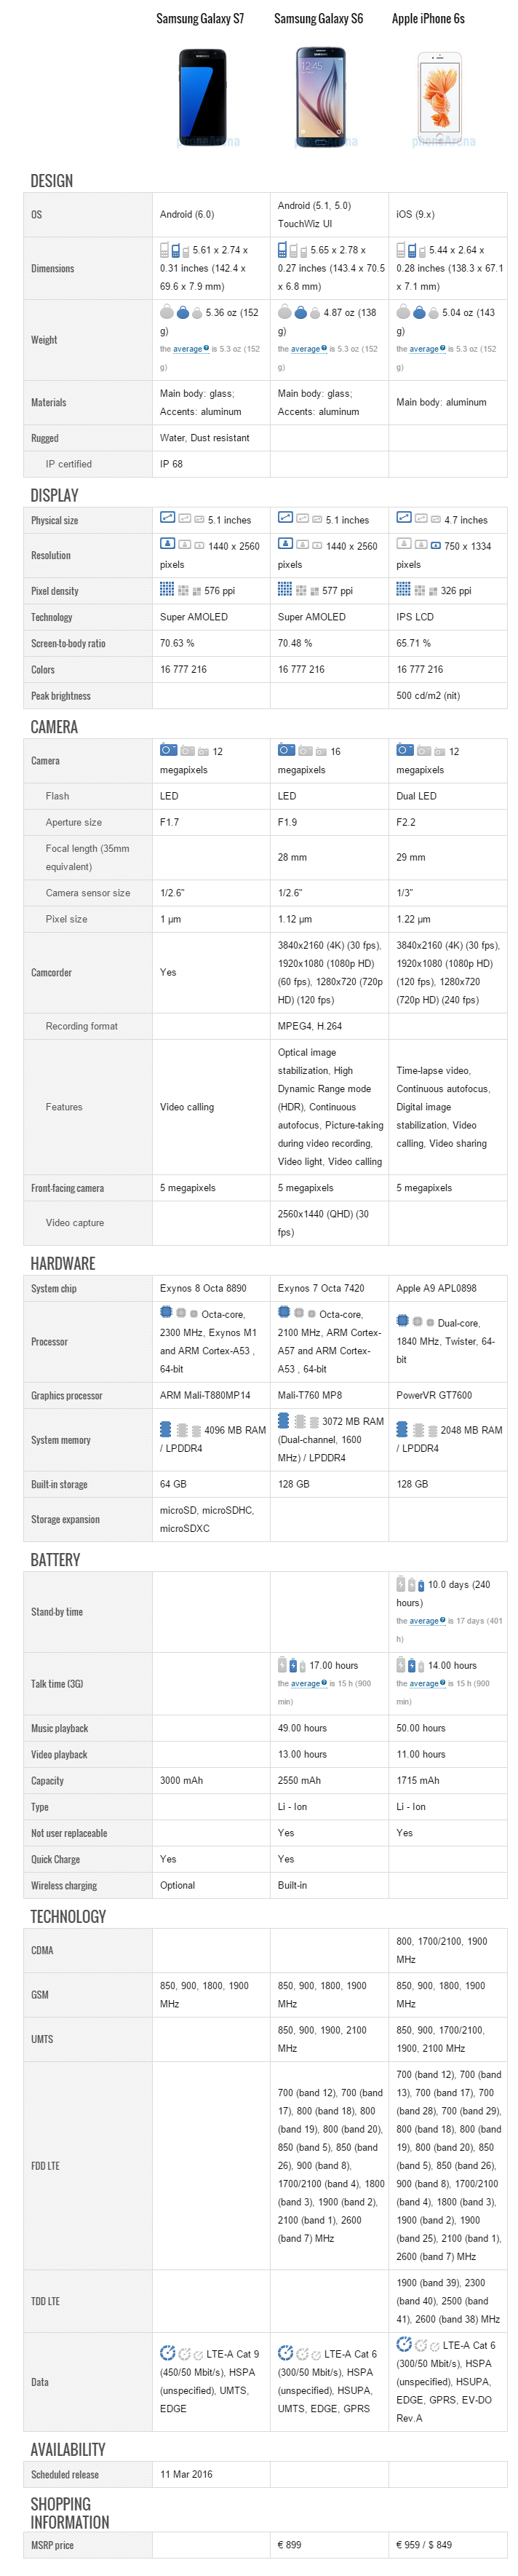 Samsung Galaxy S7 vs concurenta - iDevice.ro